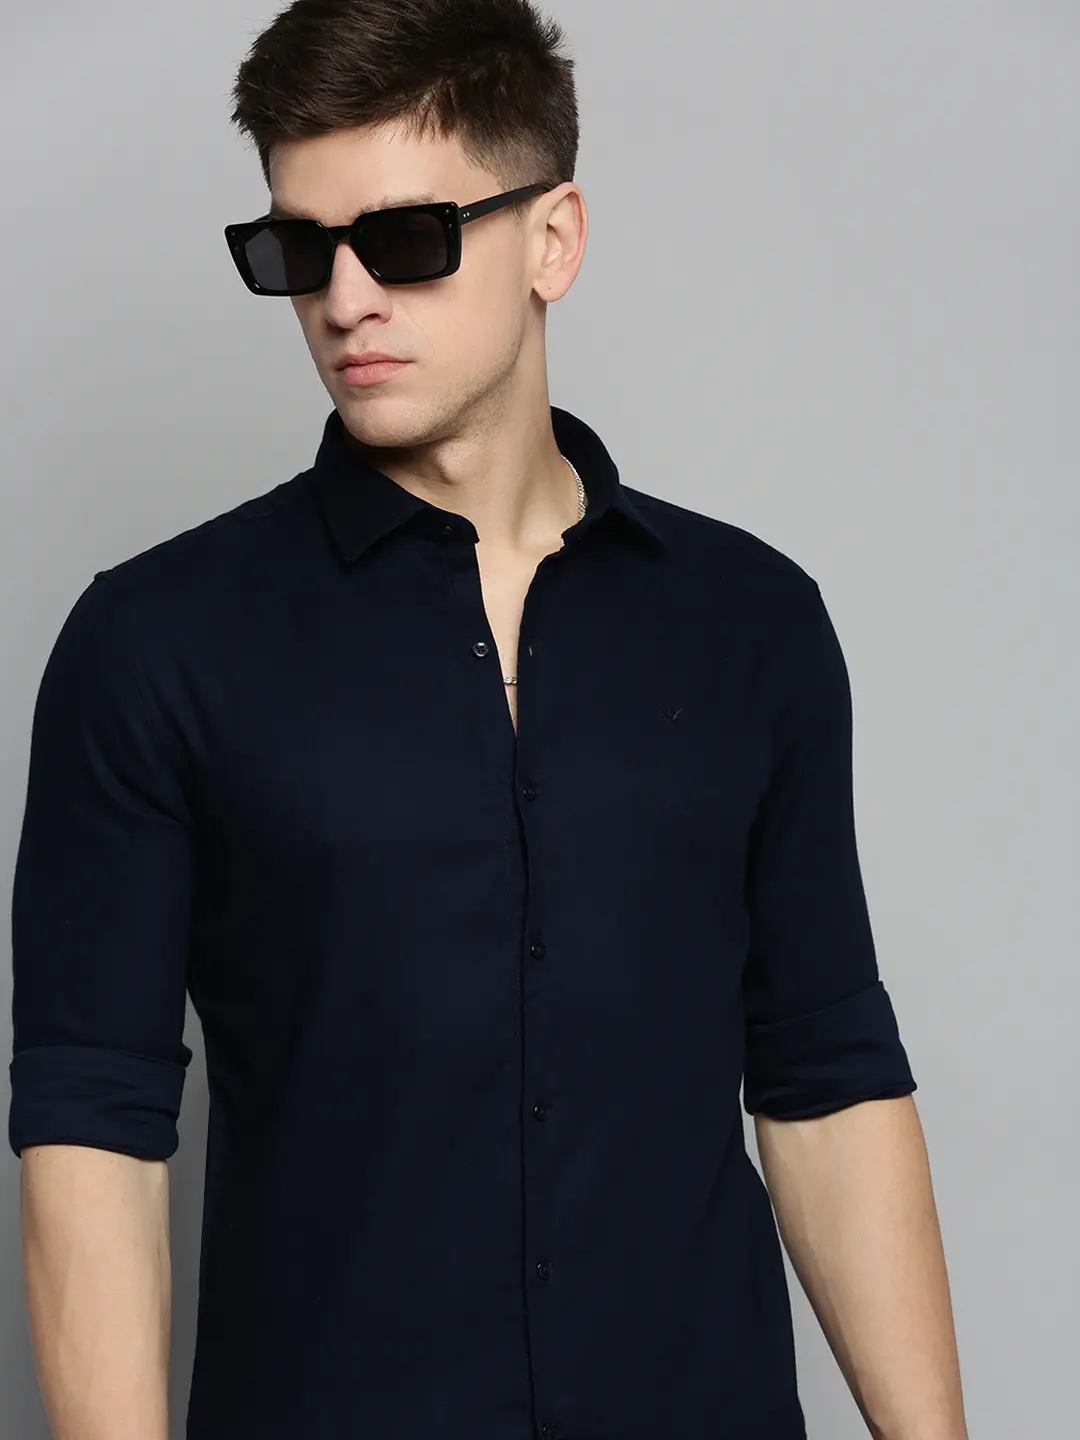 SHOWOFF Men's Spread Collar Navy Blue Solid Shirt